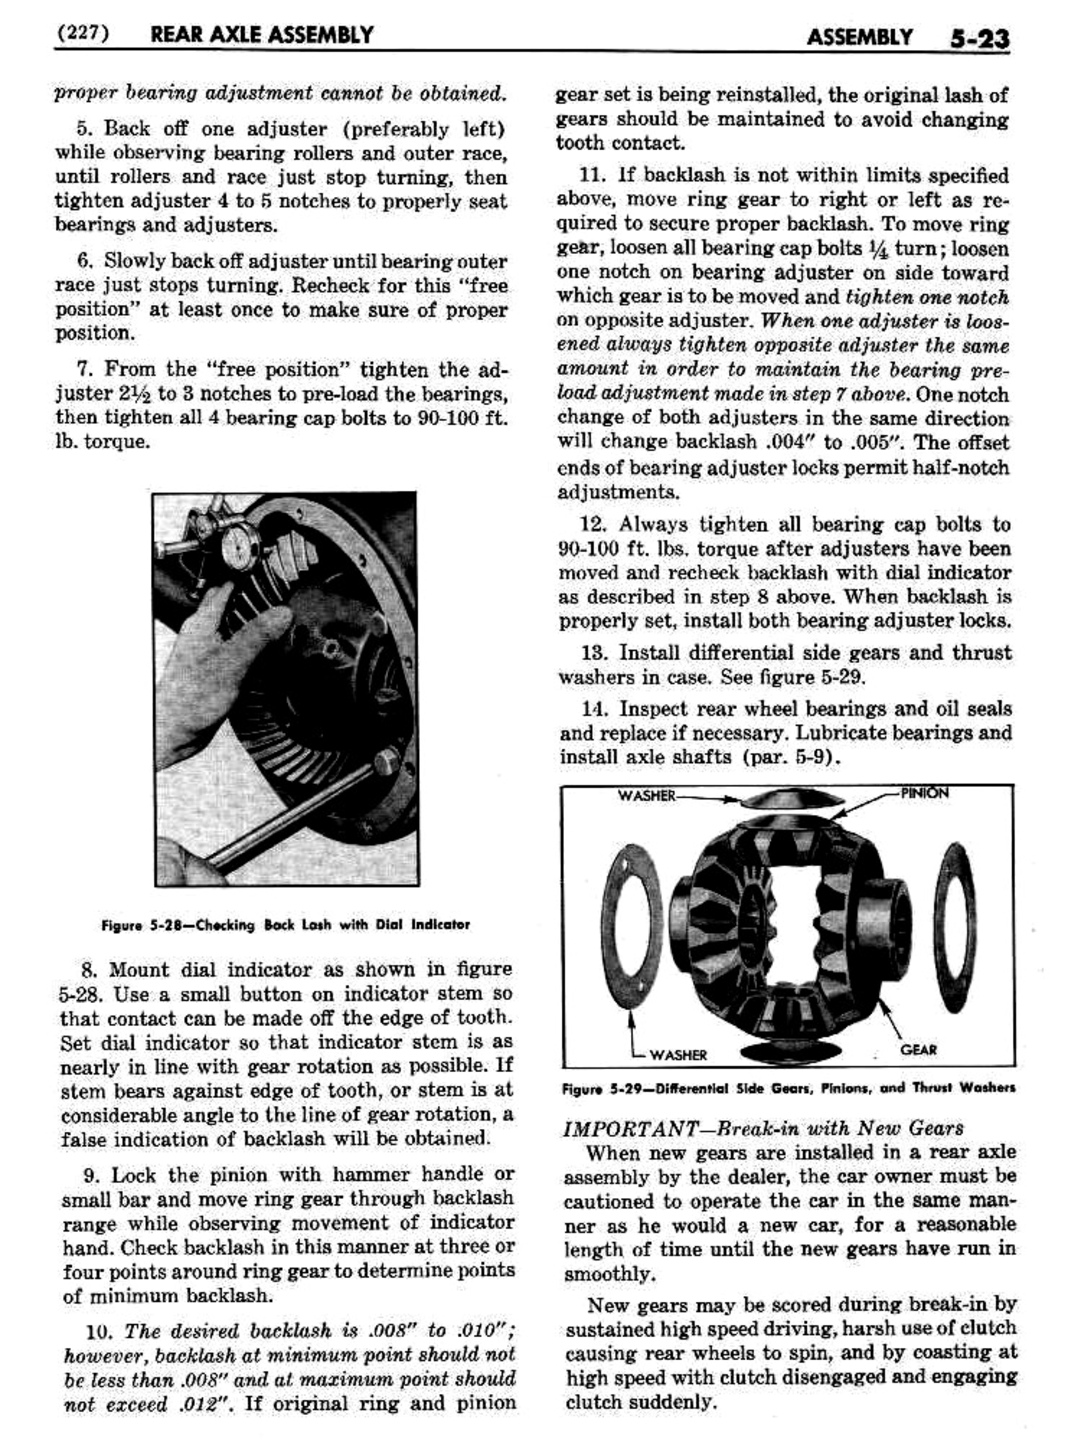 n_06 1951 Buick Shop Manual - Rear Axle-023-023.jpg